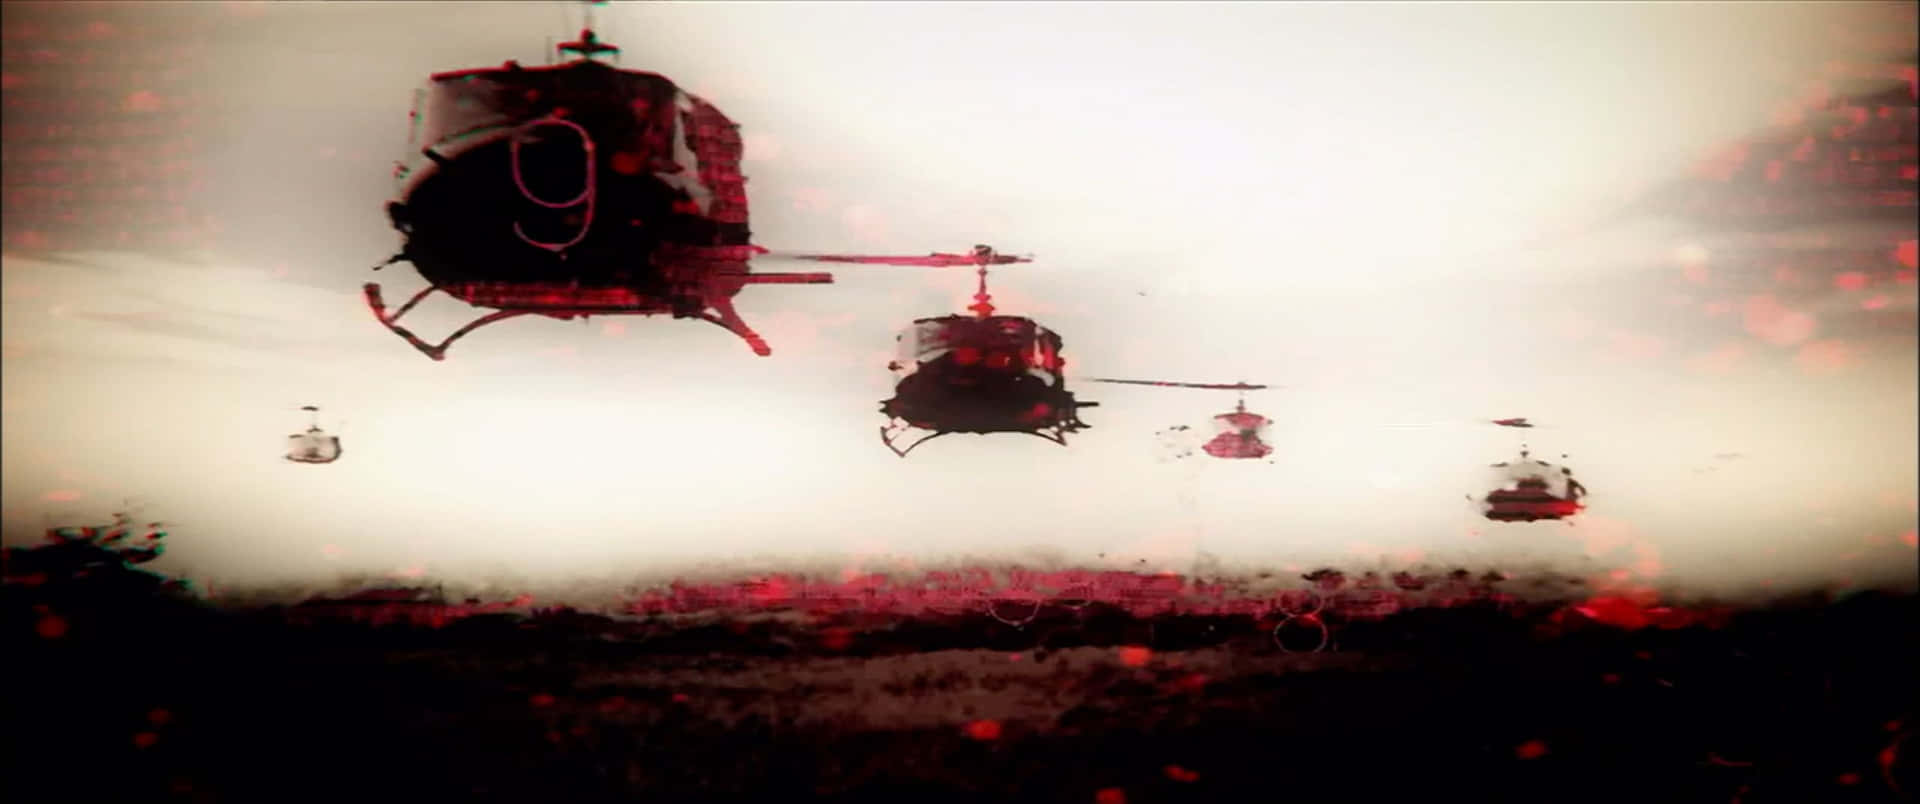 3440x1440phintergrund Mit Helikoptern Aus Call Of Duty Black Ops Cold War